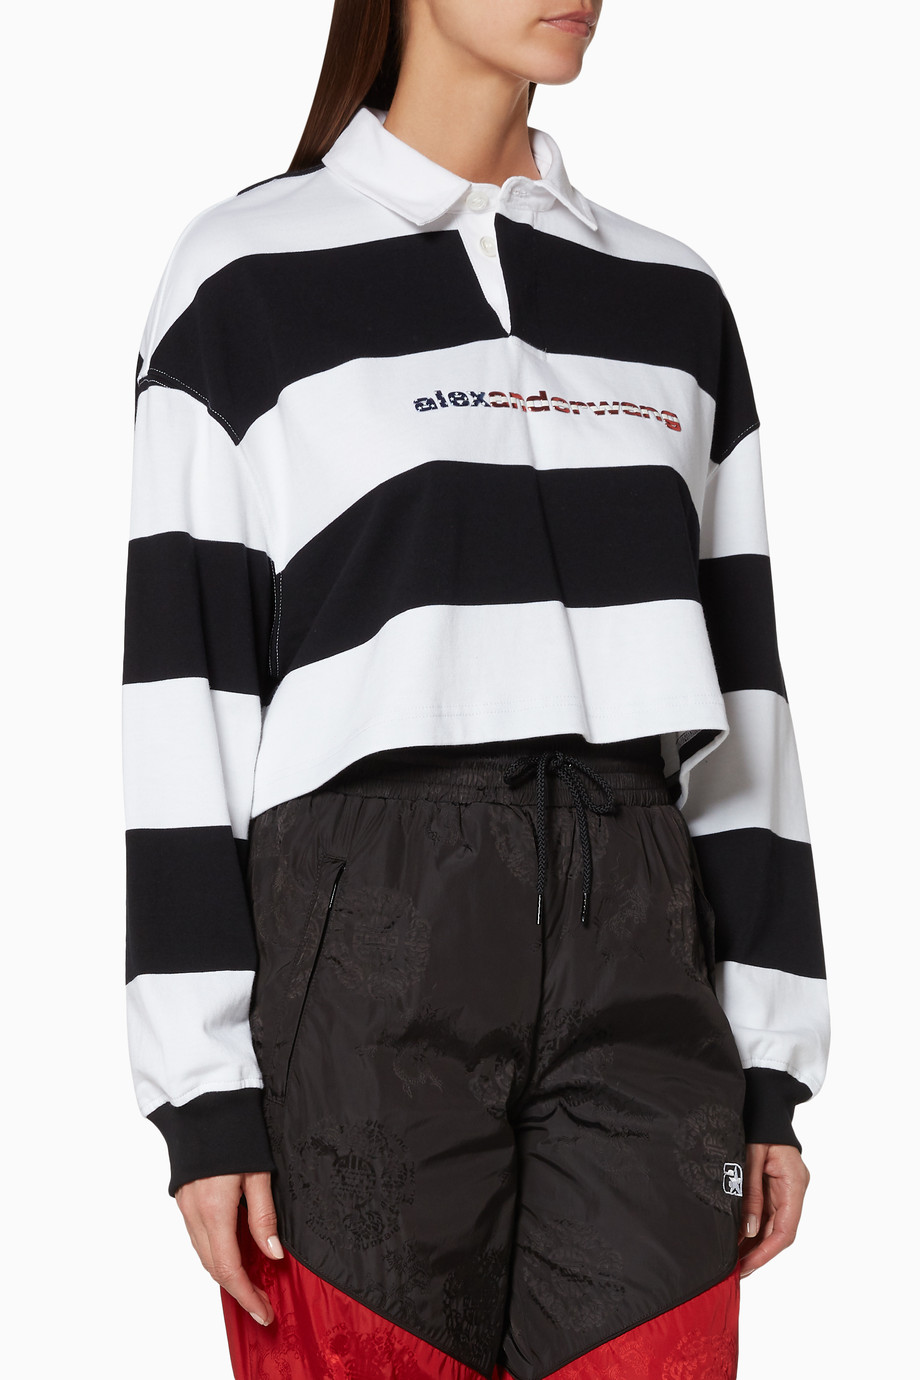 Black And White Striped Rugby Shirt Buyudum Cocuk Oldum - black and white striped oversized shirt roblox